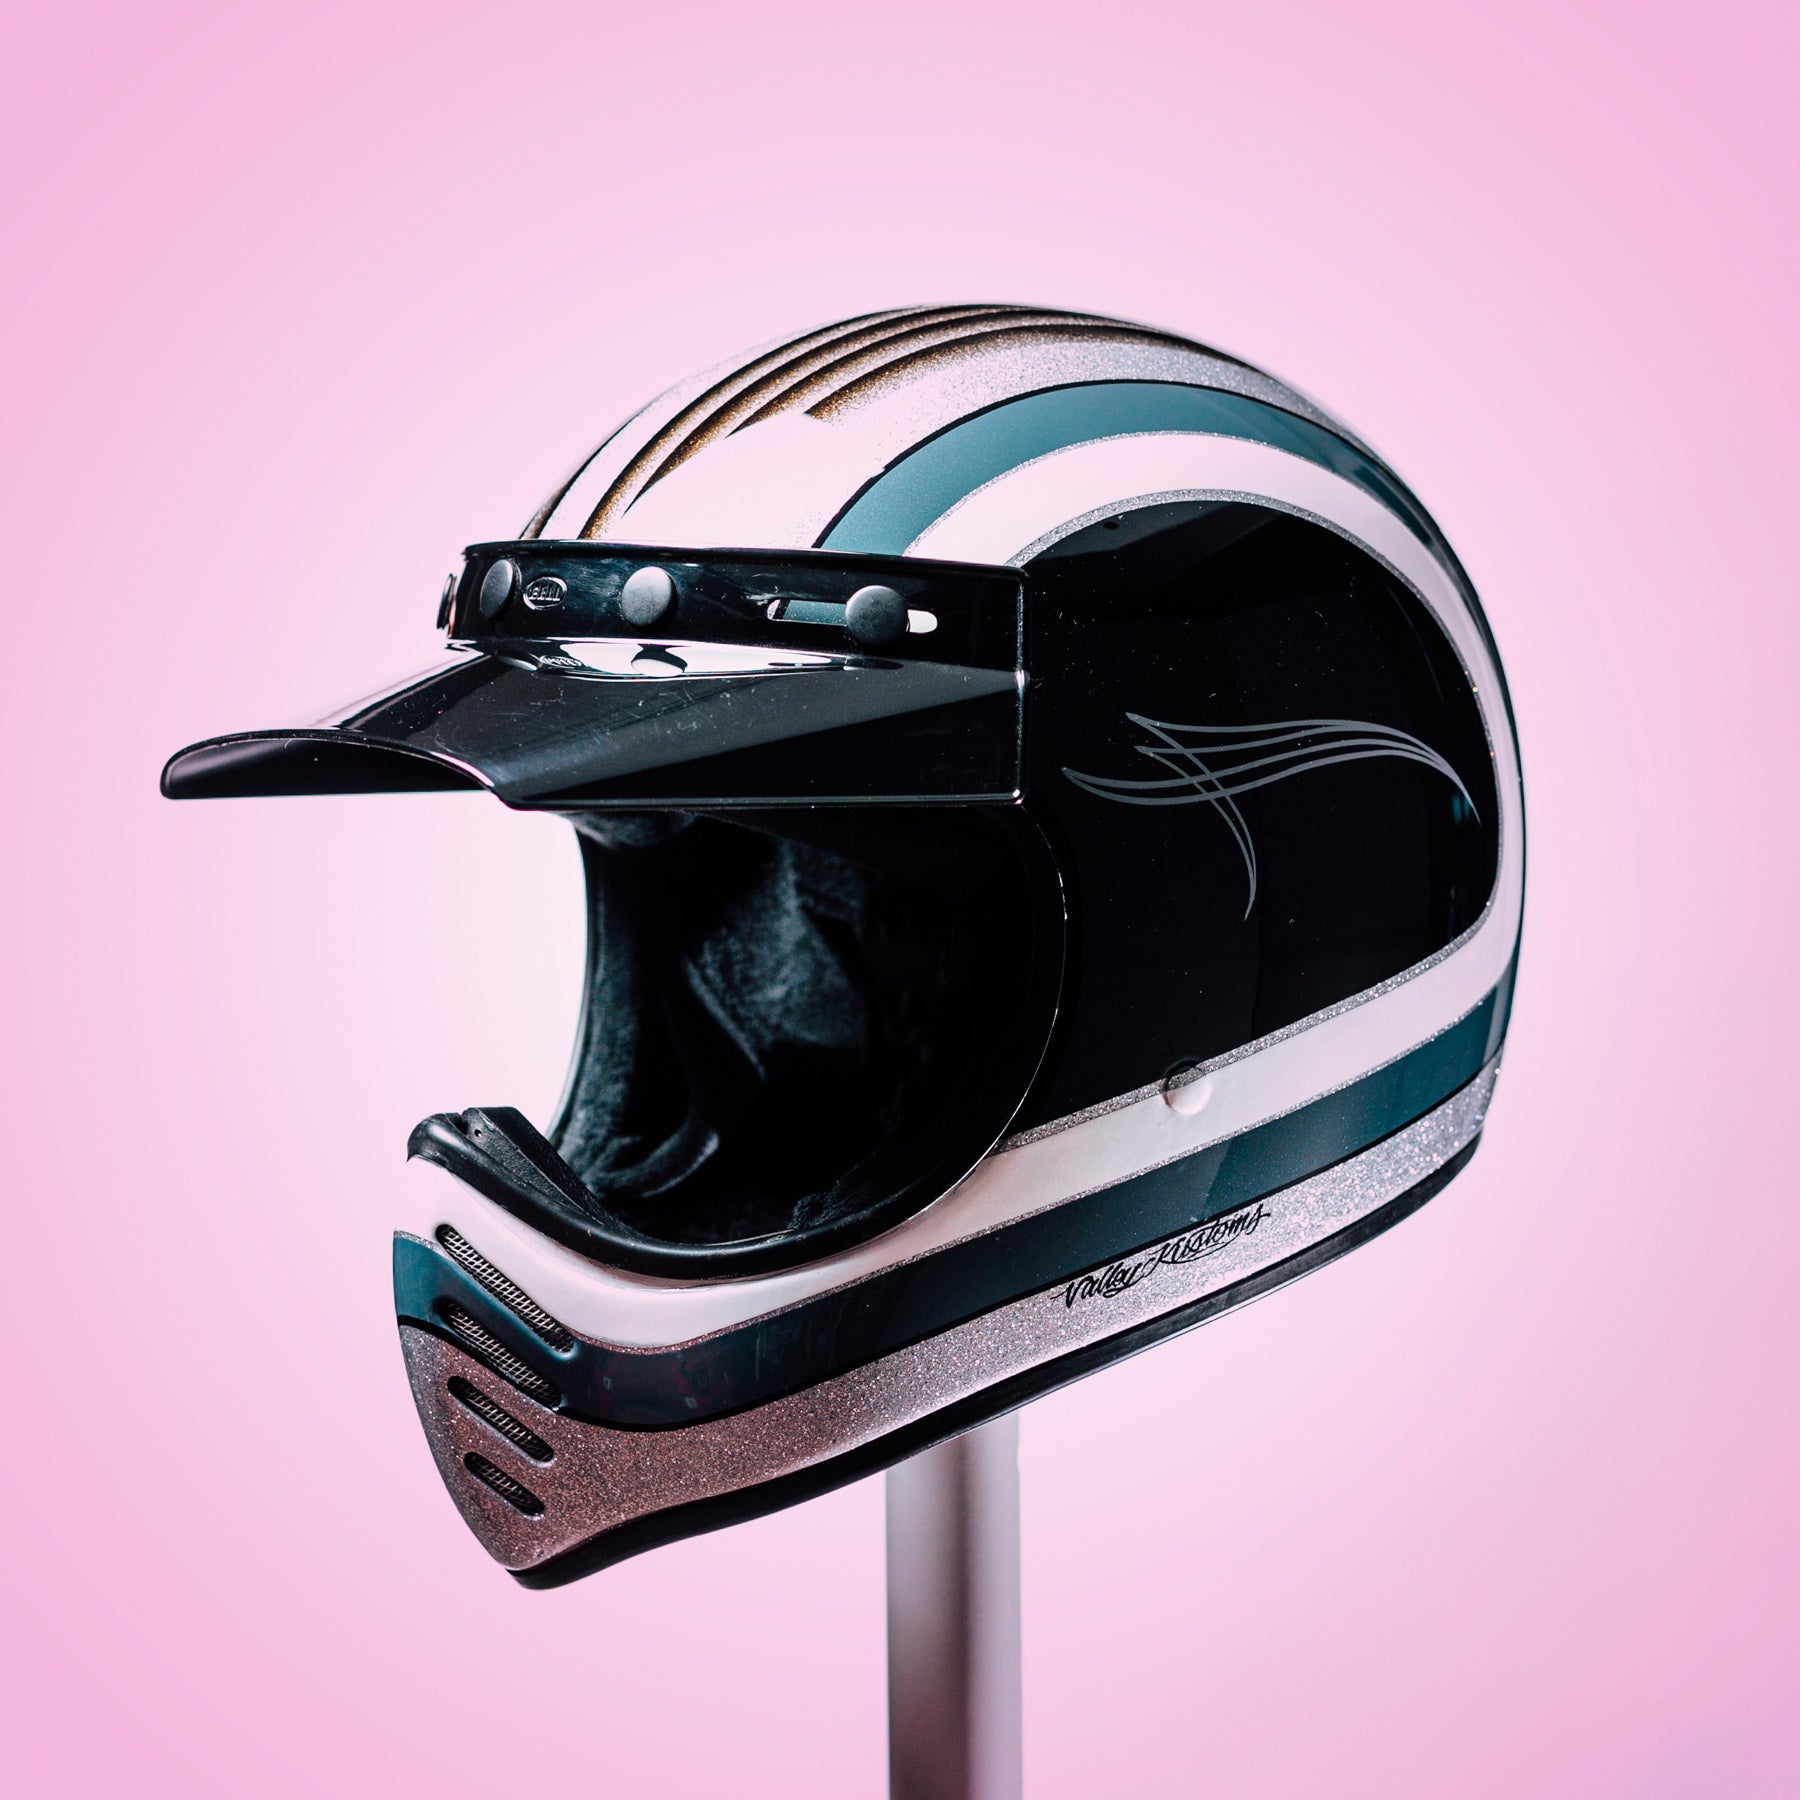 Trippy Ten helmet art show Pittsburgh Glory Daze motorcycle show Kurt Alexa Diserio Bell Helmets Gerad Poepke